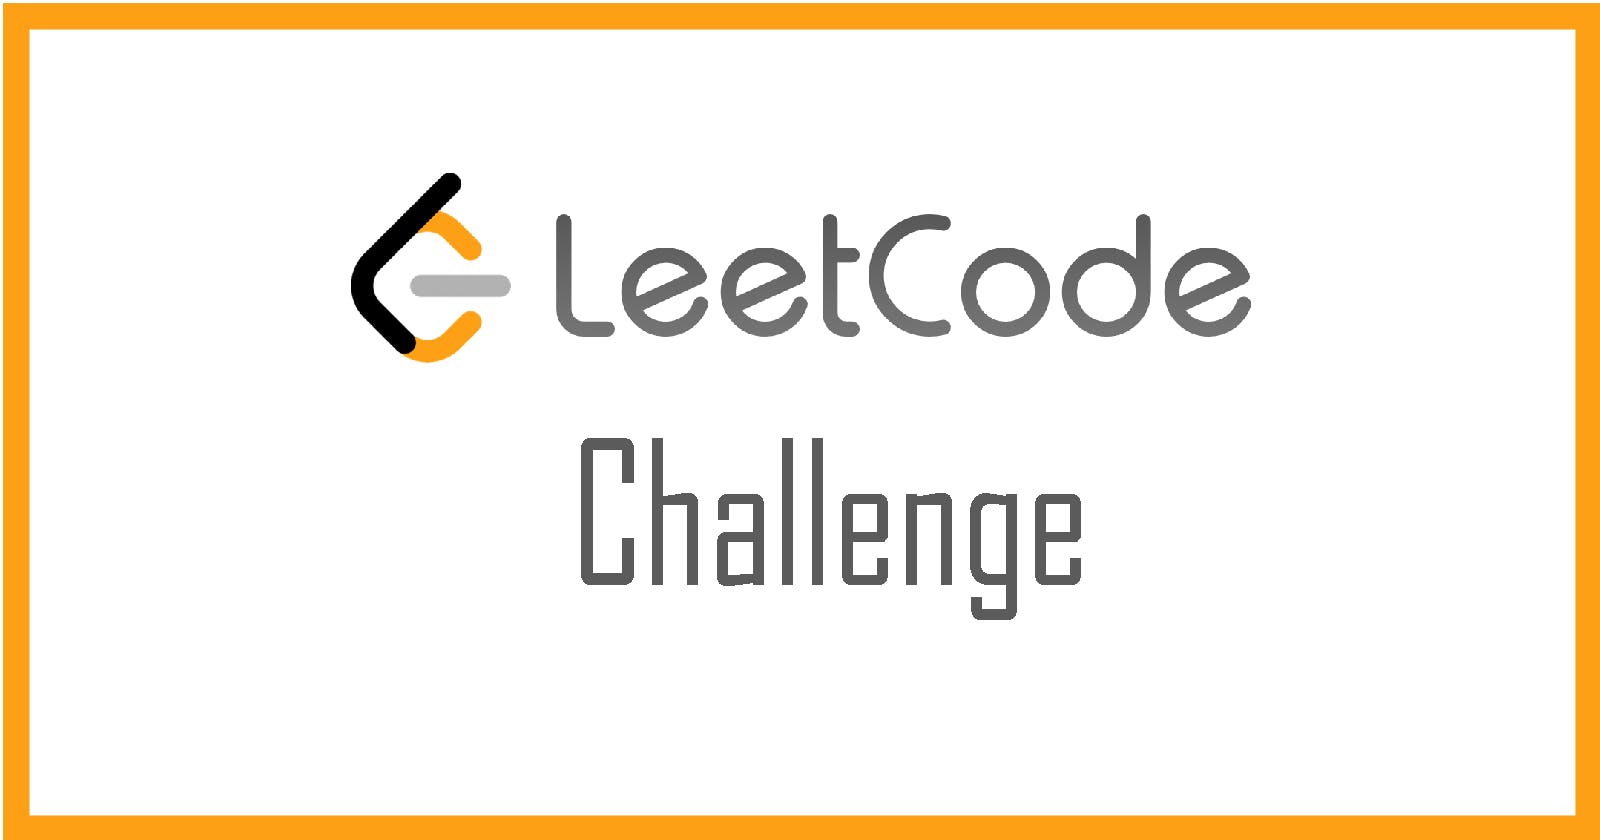 Bot Slack sends daily leetCoding challenge